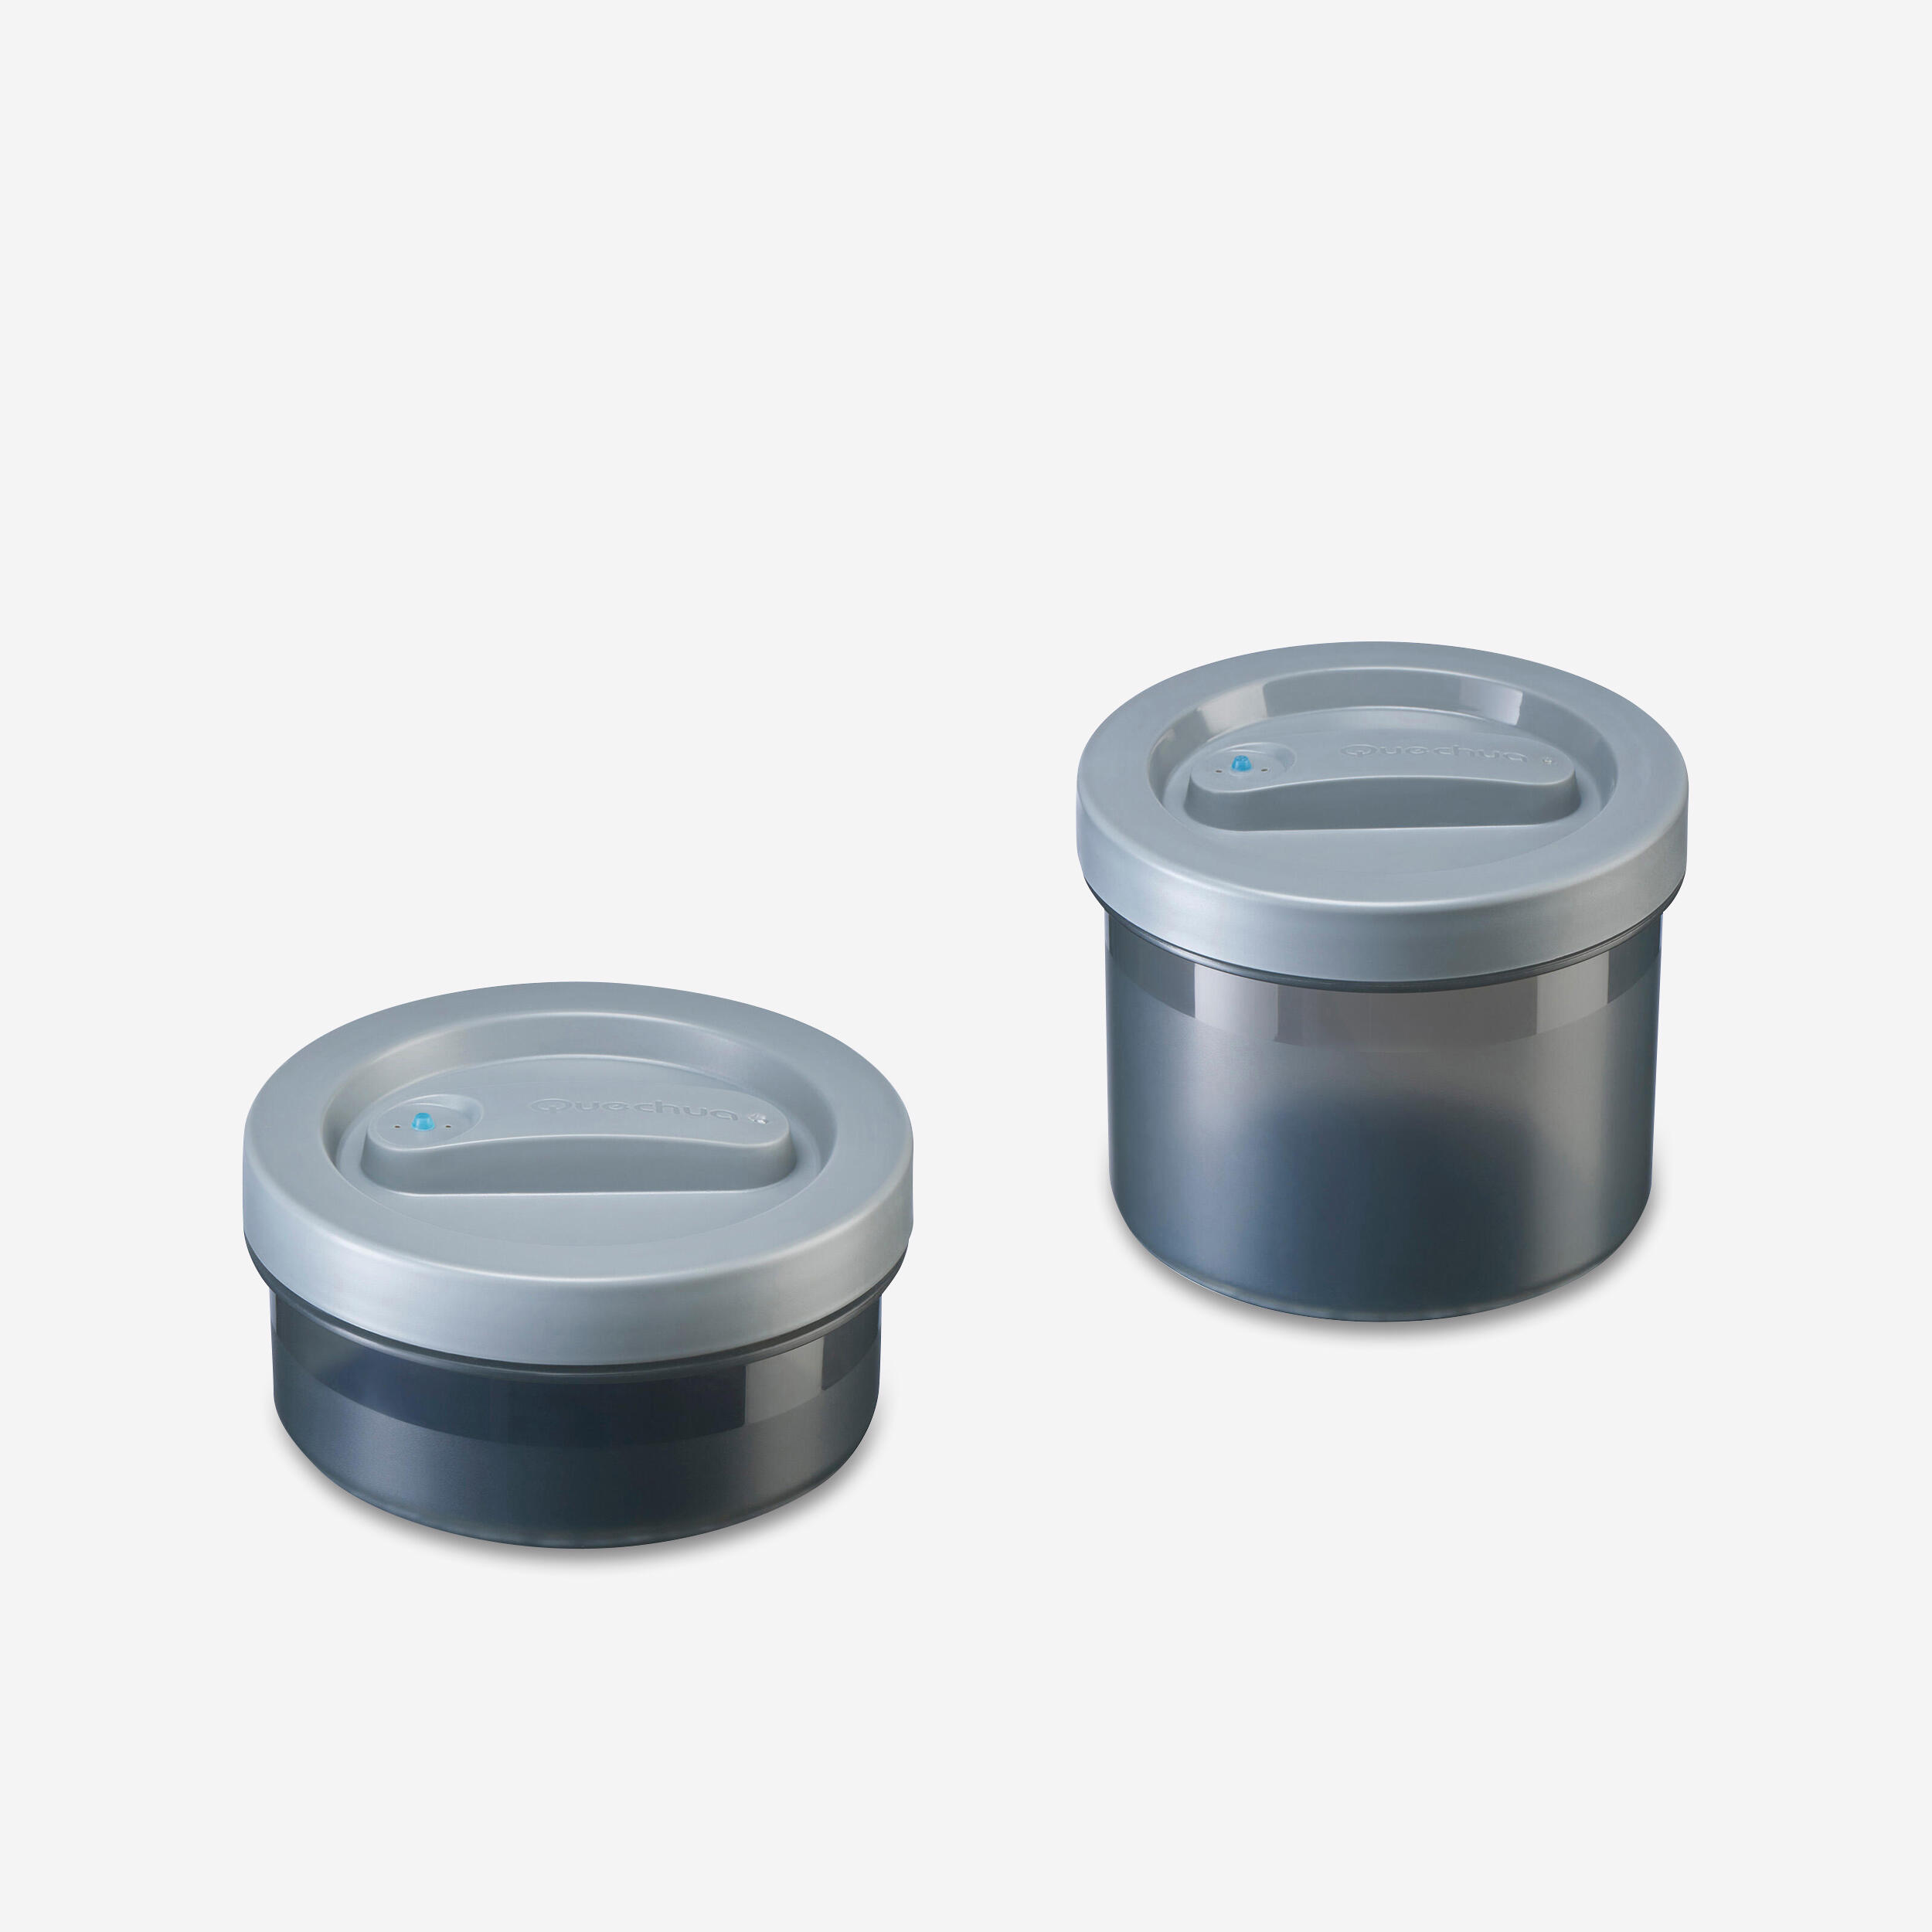 QUECHUA 2 airtight food box kit - 0.35 and 0.65 Litre